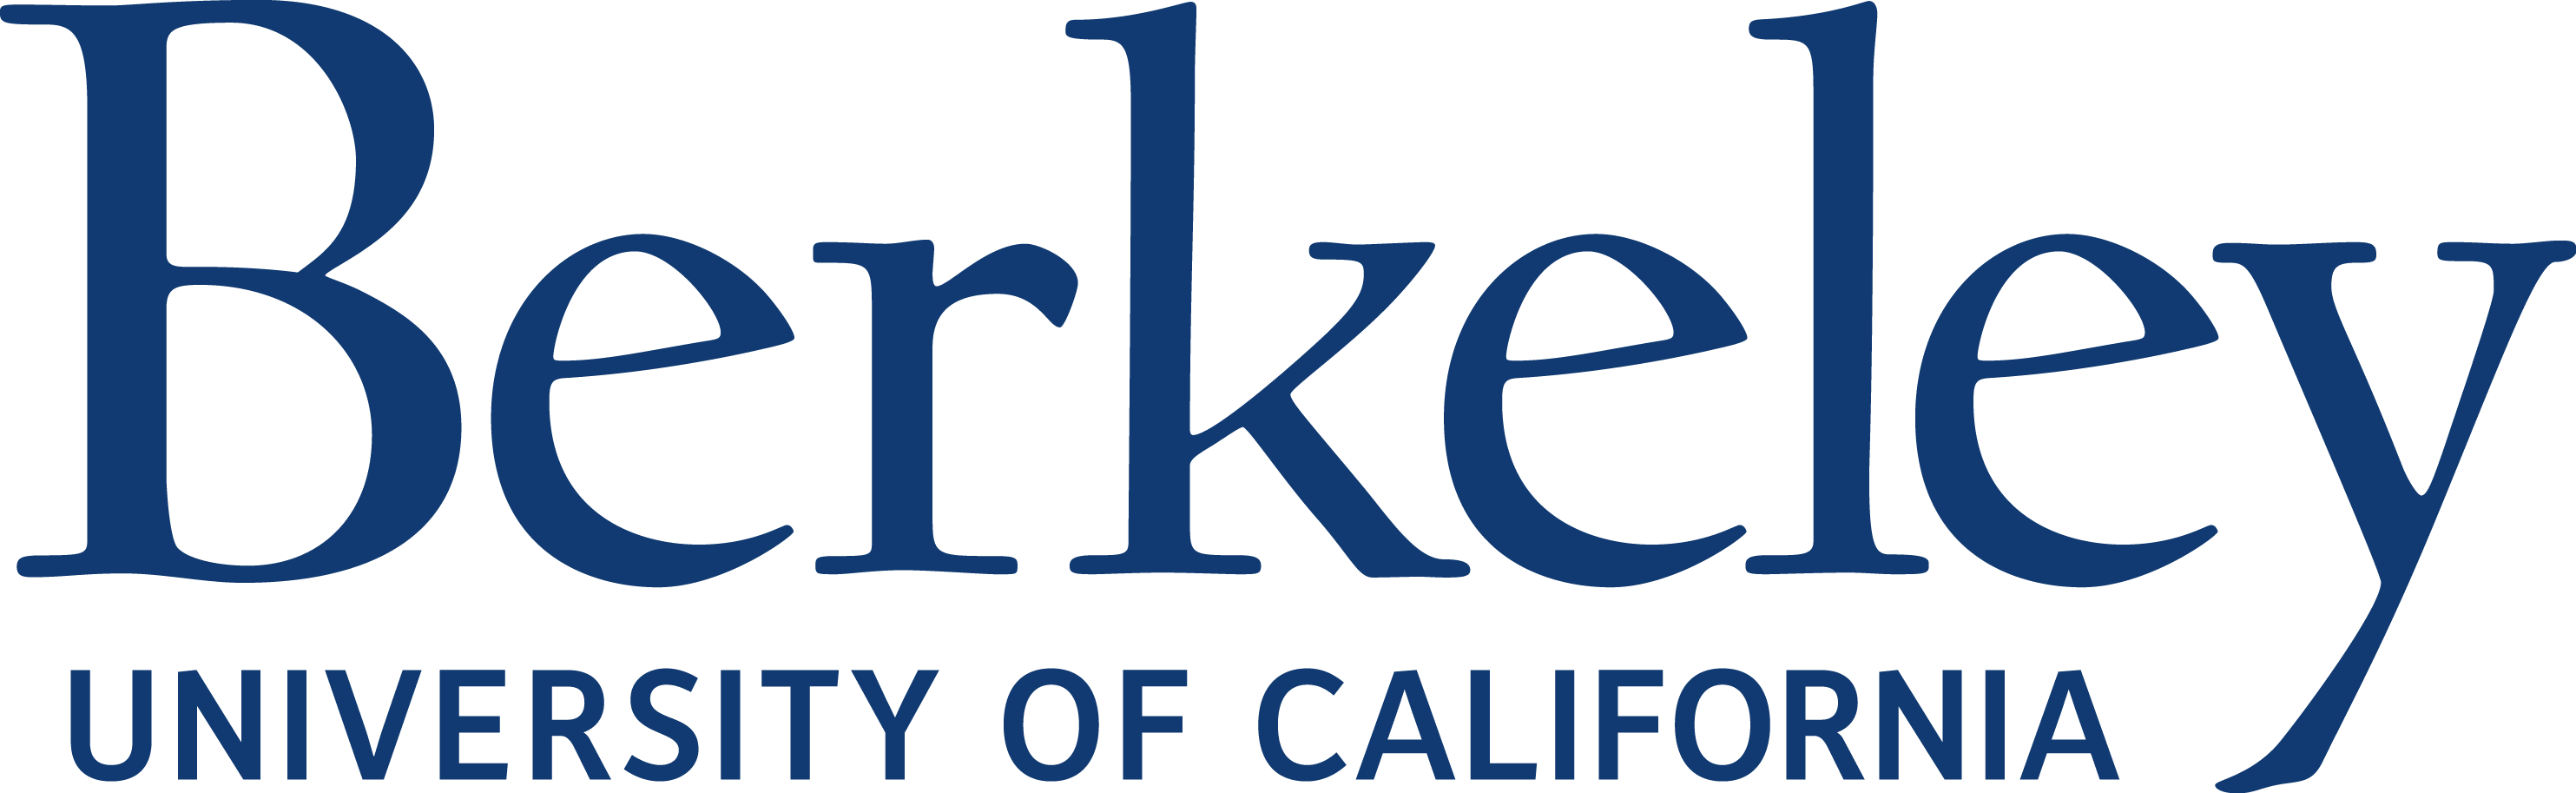 Berkeley University of California-logo